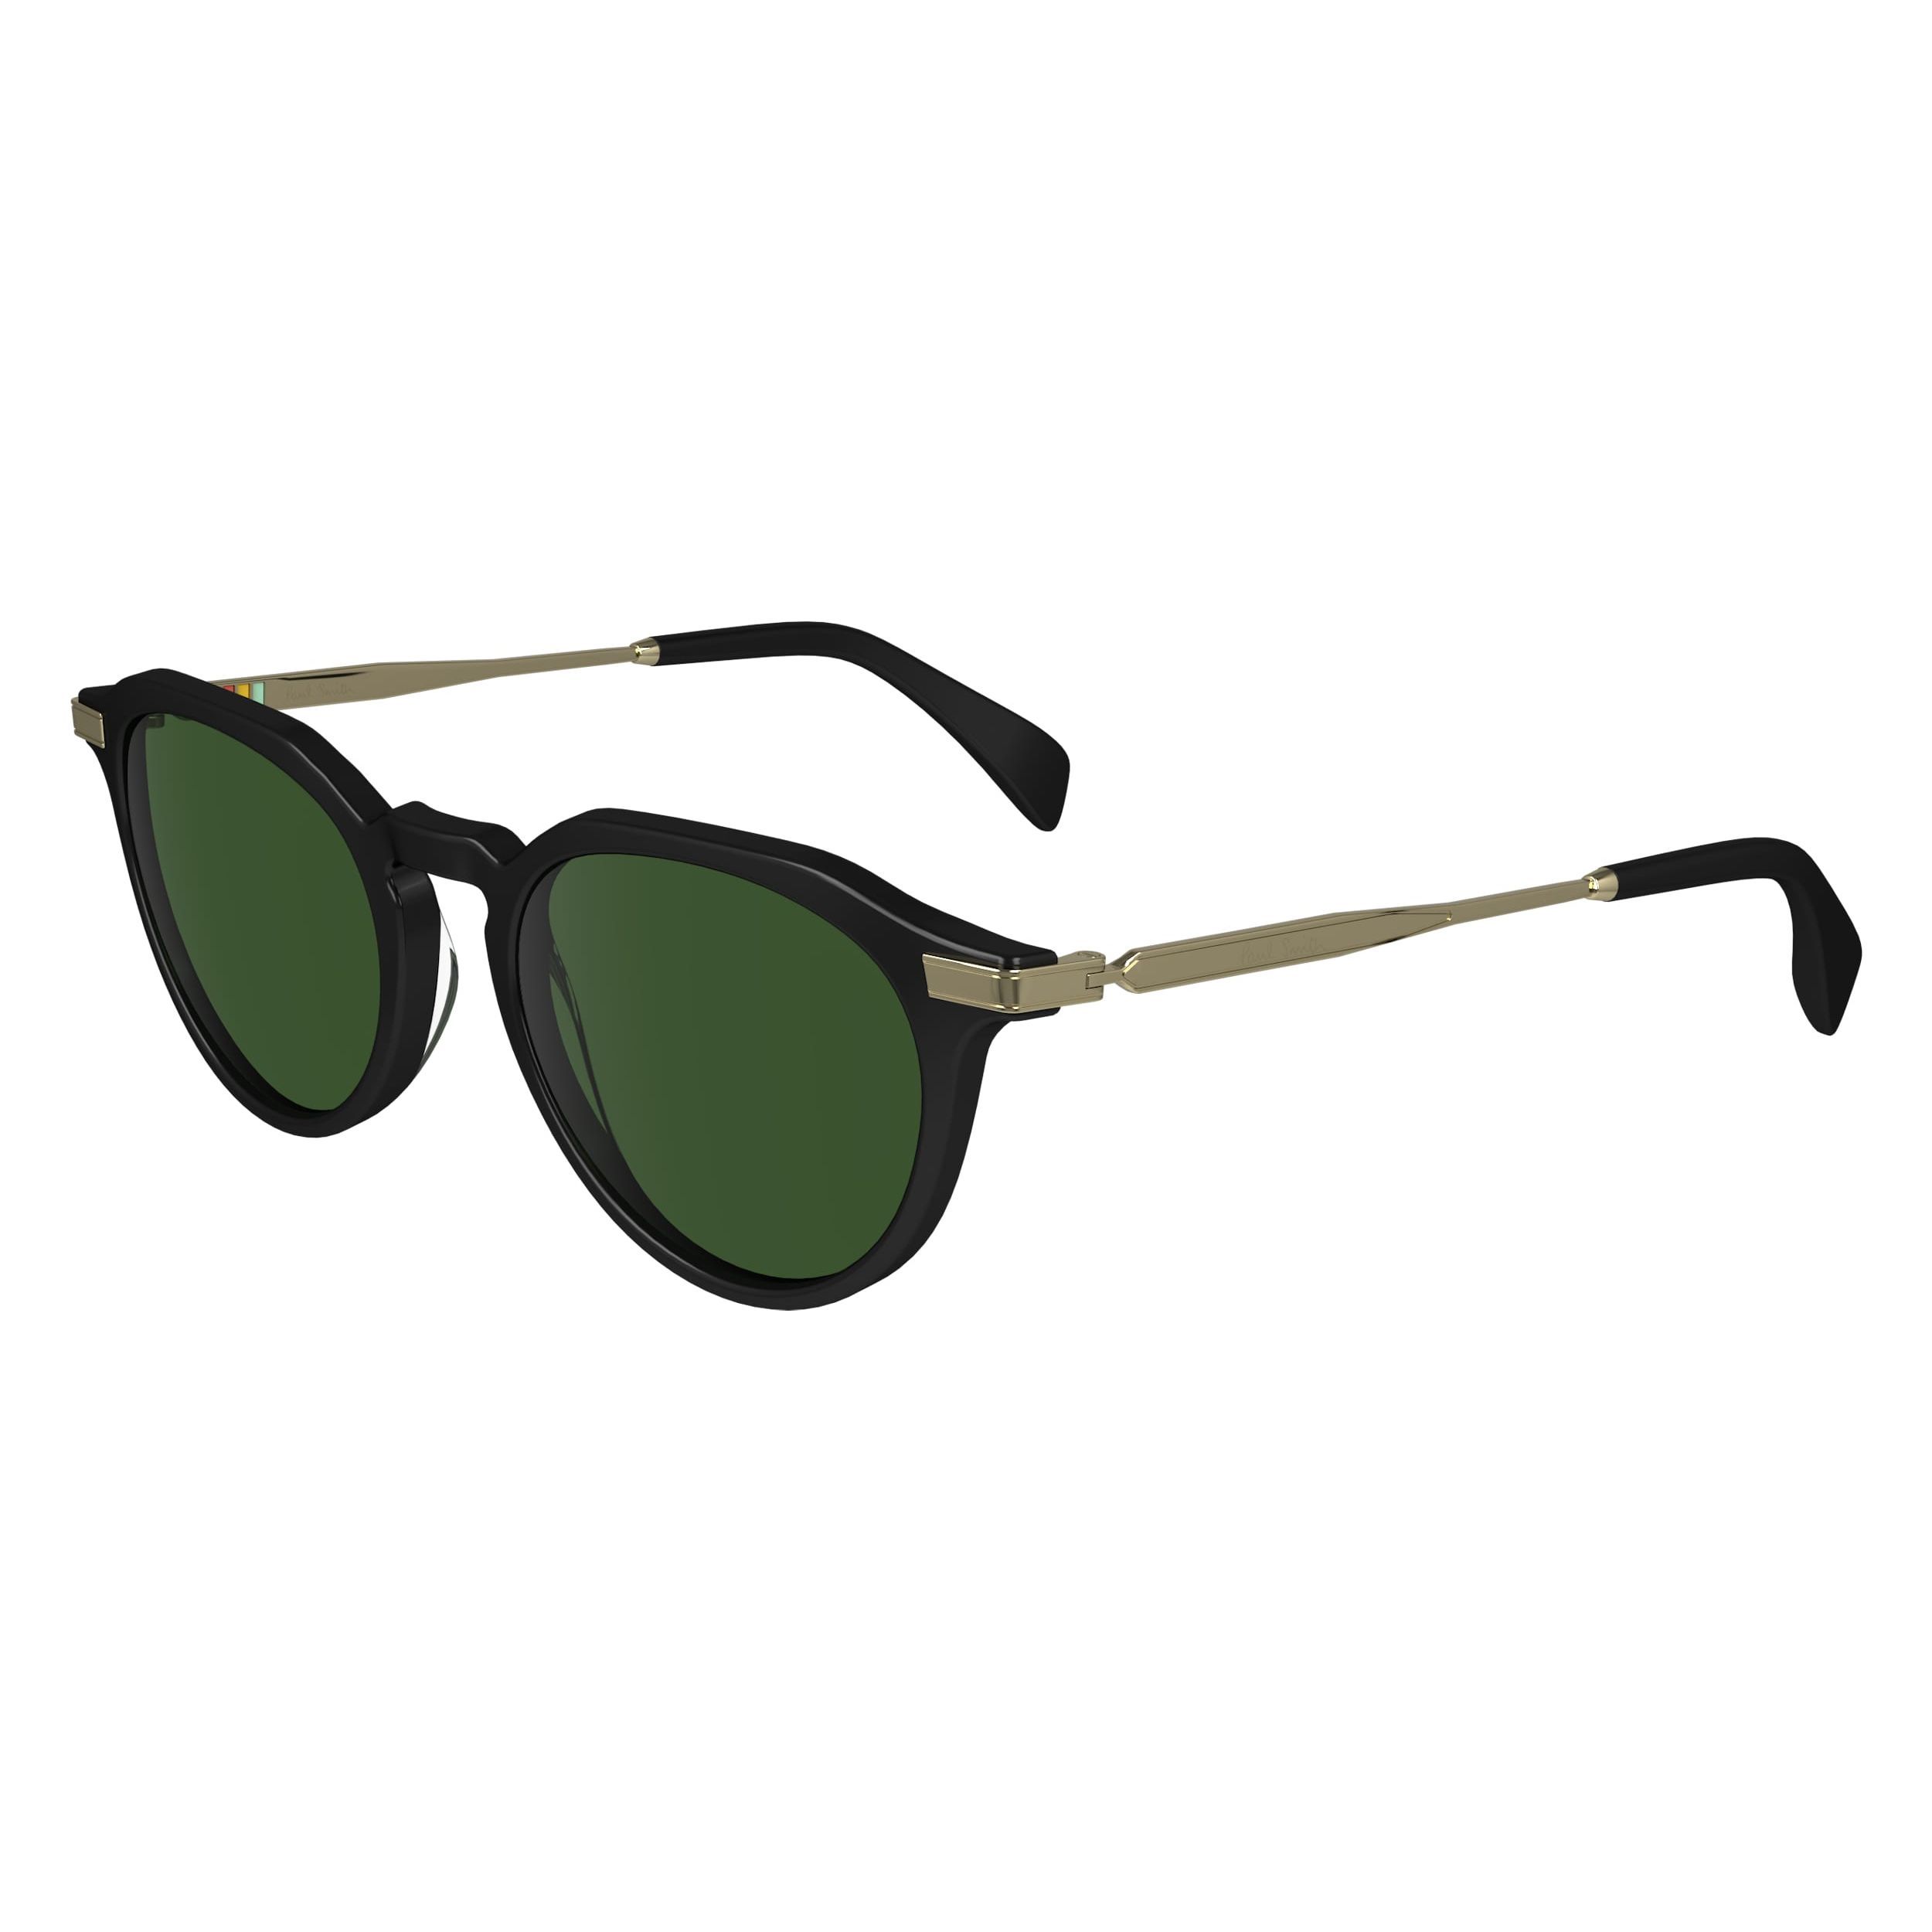 KEATS Oval Sunglasses 001 - size 51